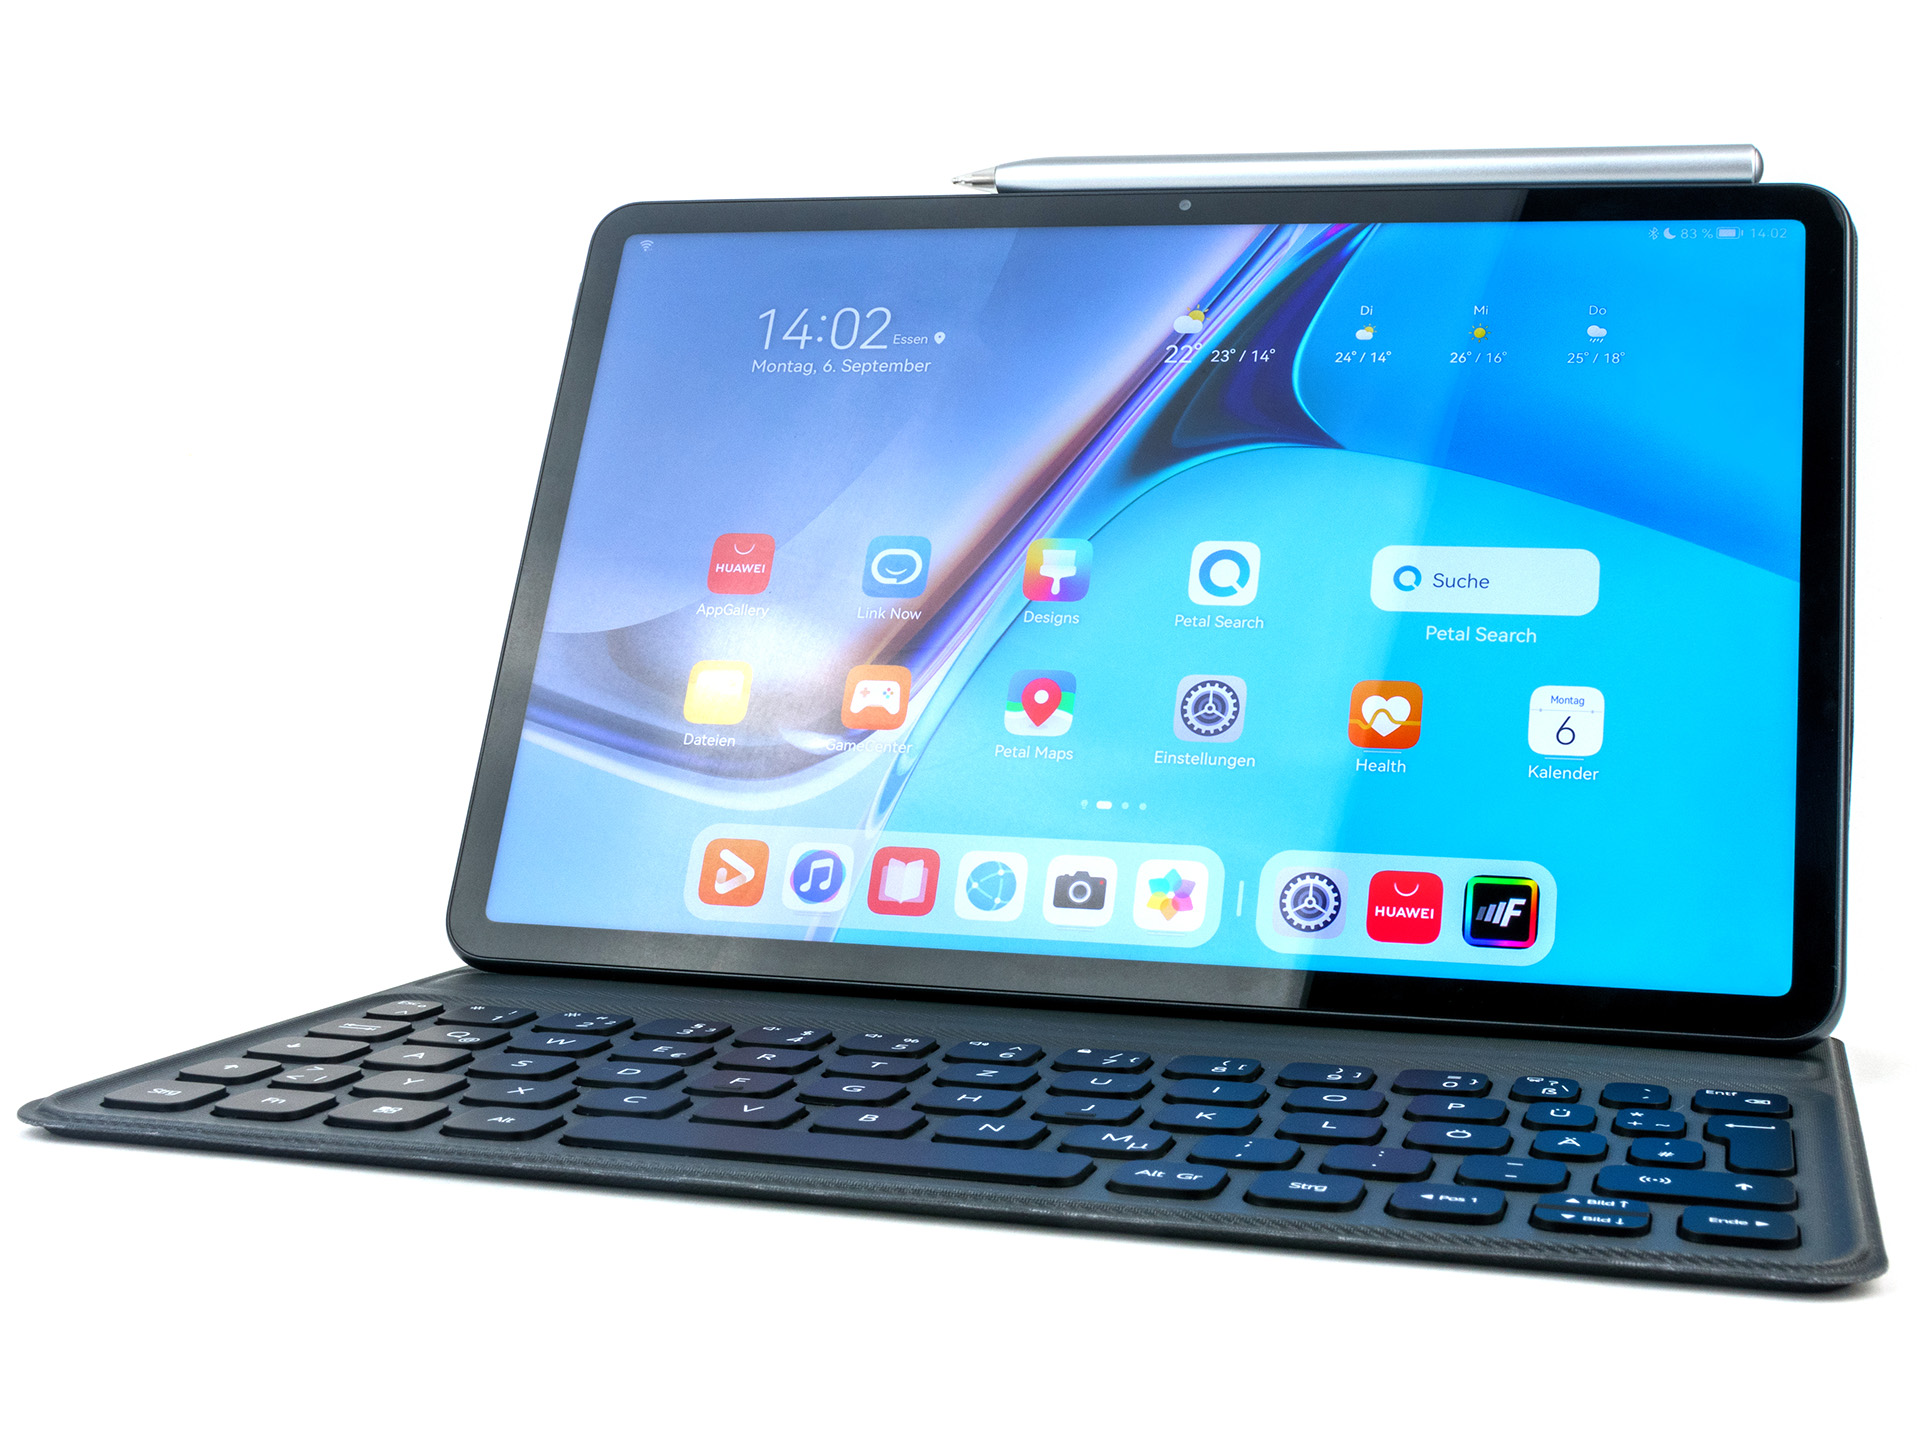 Tablette Huawei MatePad 11 / 6 Go / 128 Go Avec Clavier HUAWEI